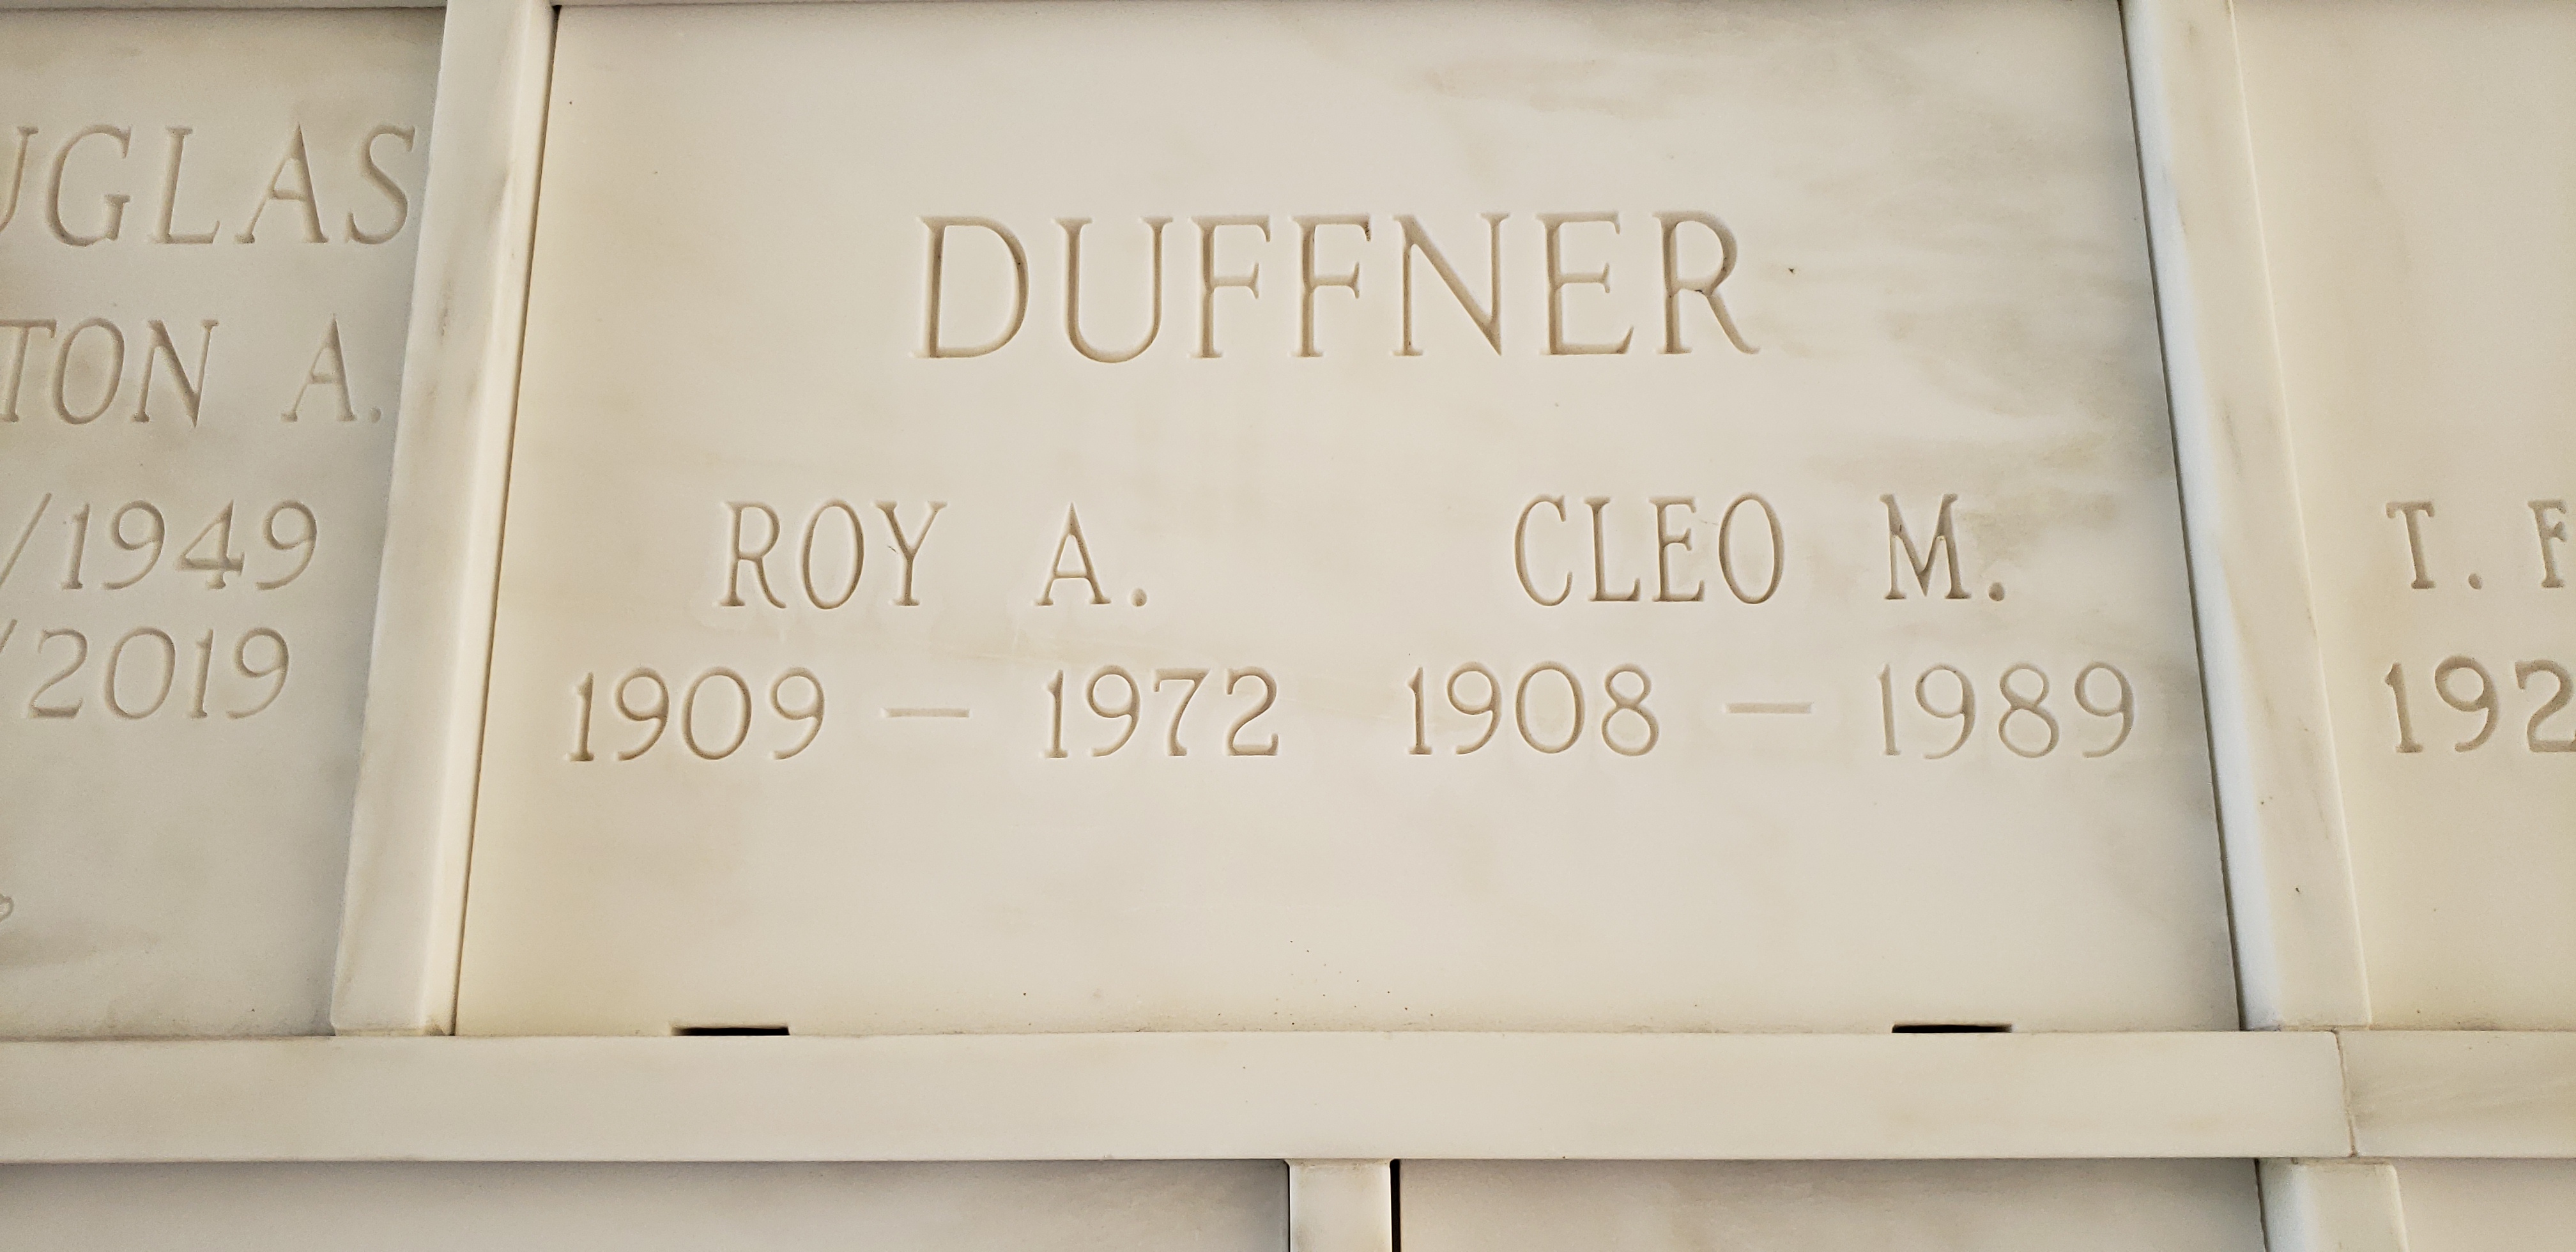 Roy A Duffner